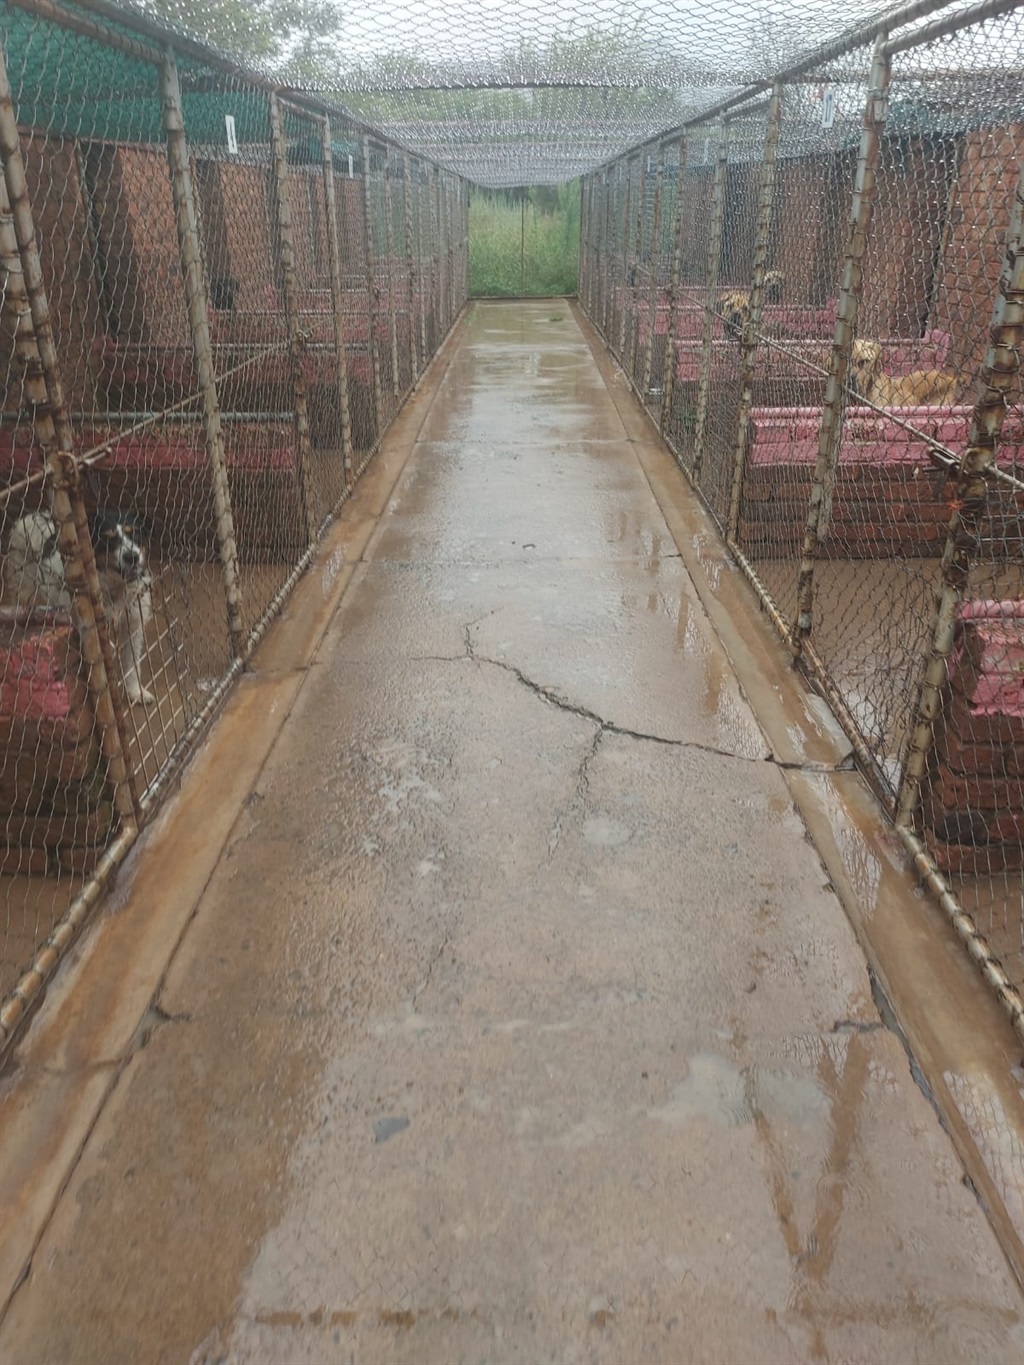 SPCA premises flooded after heavy rains